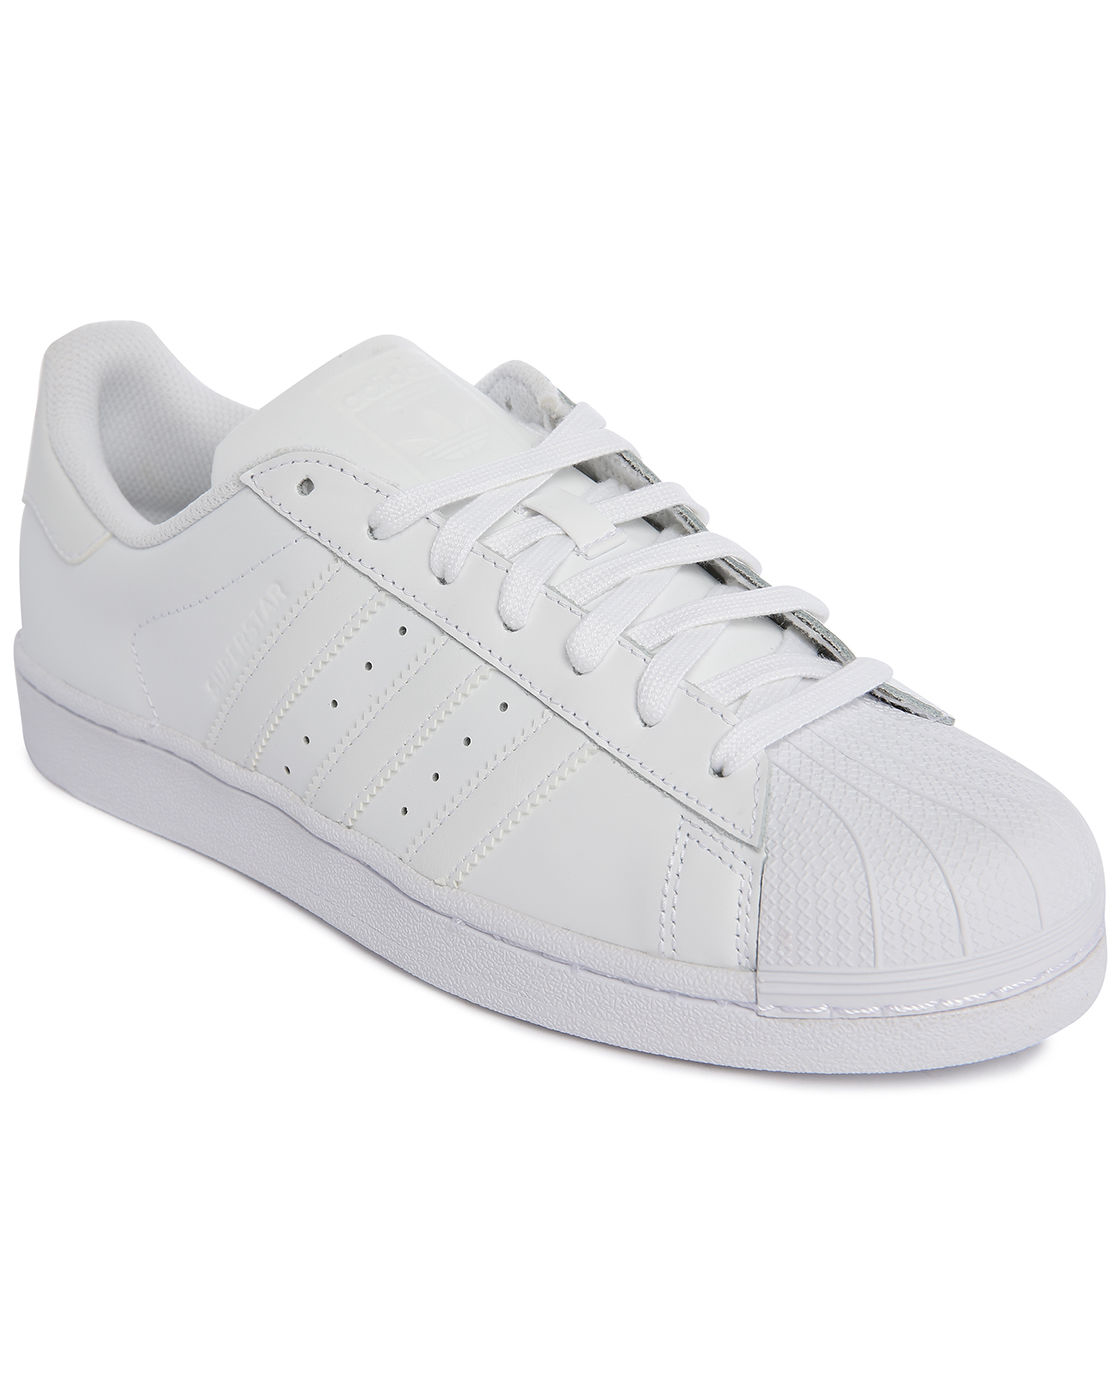 Adidas originals Superstar Classic Mono White Leather Sneakers in White